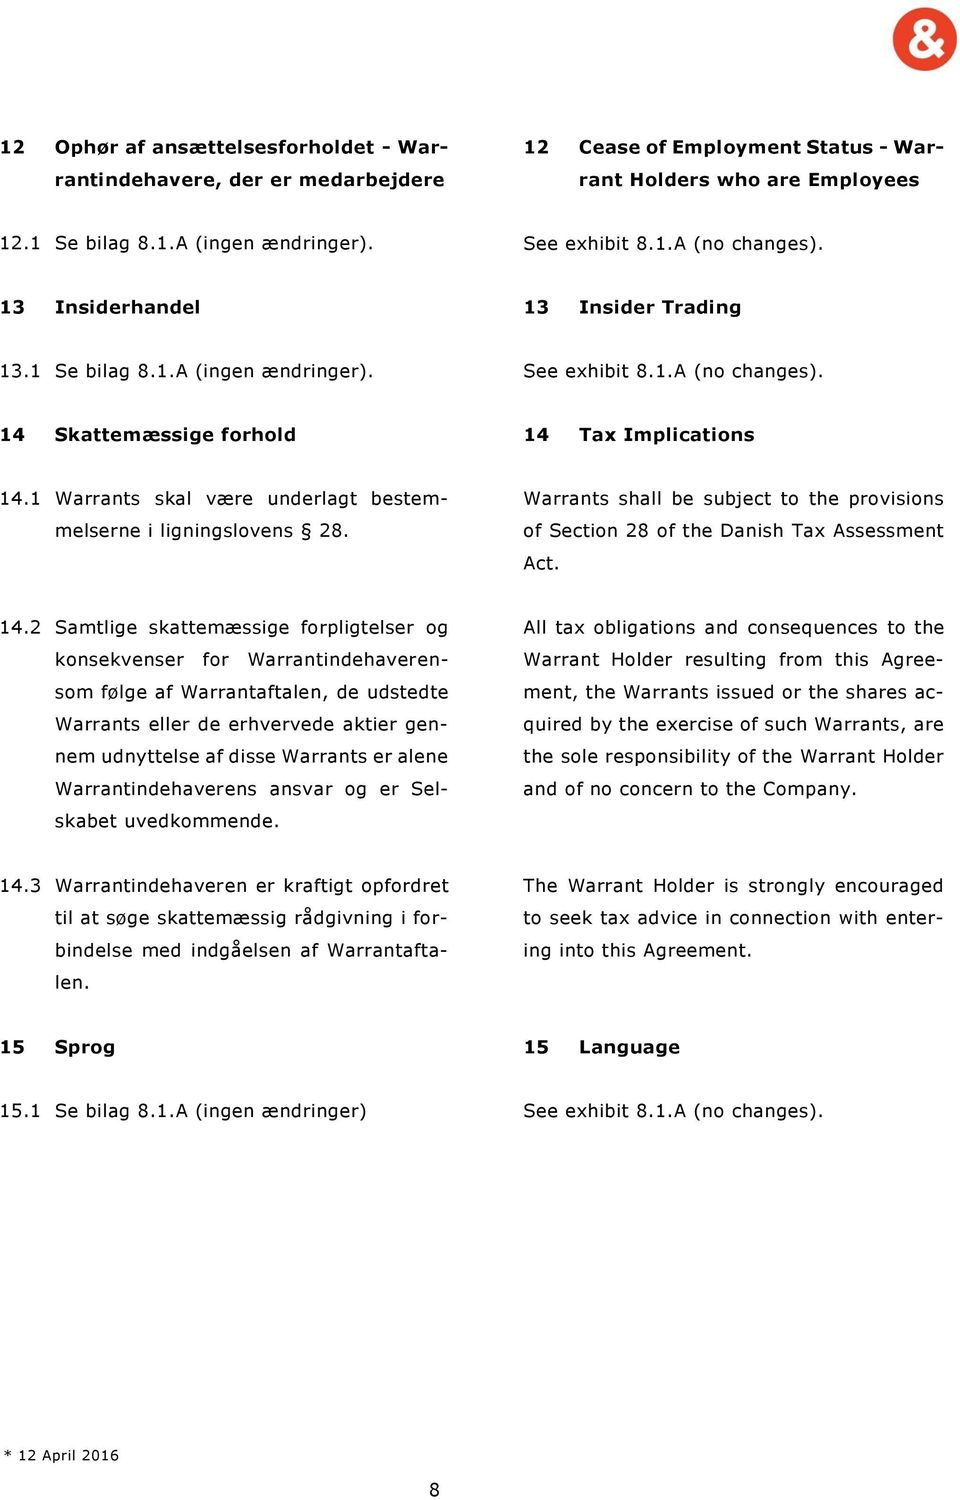 1 Warrants skal være underlagt bestemmelserne i ligningslovens 28. Warrants shall be subject to the provisions of Section 28 of the Danish Tax Assessment Act. 14.